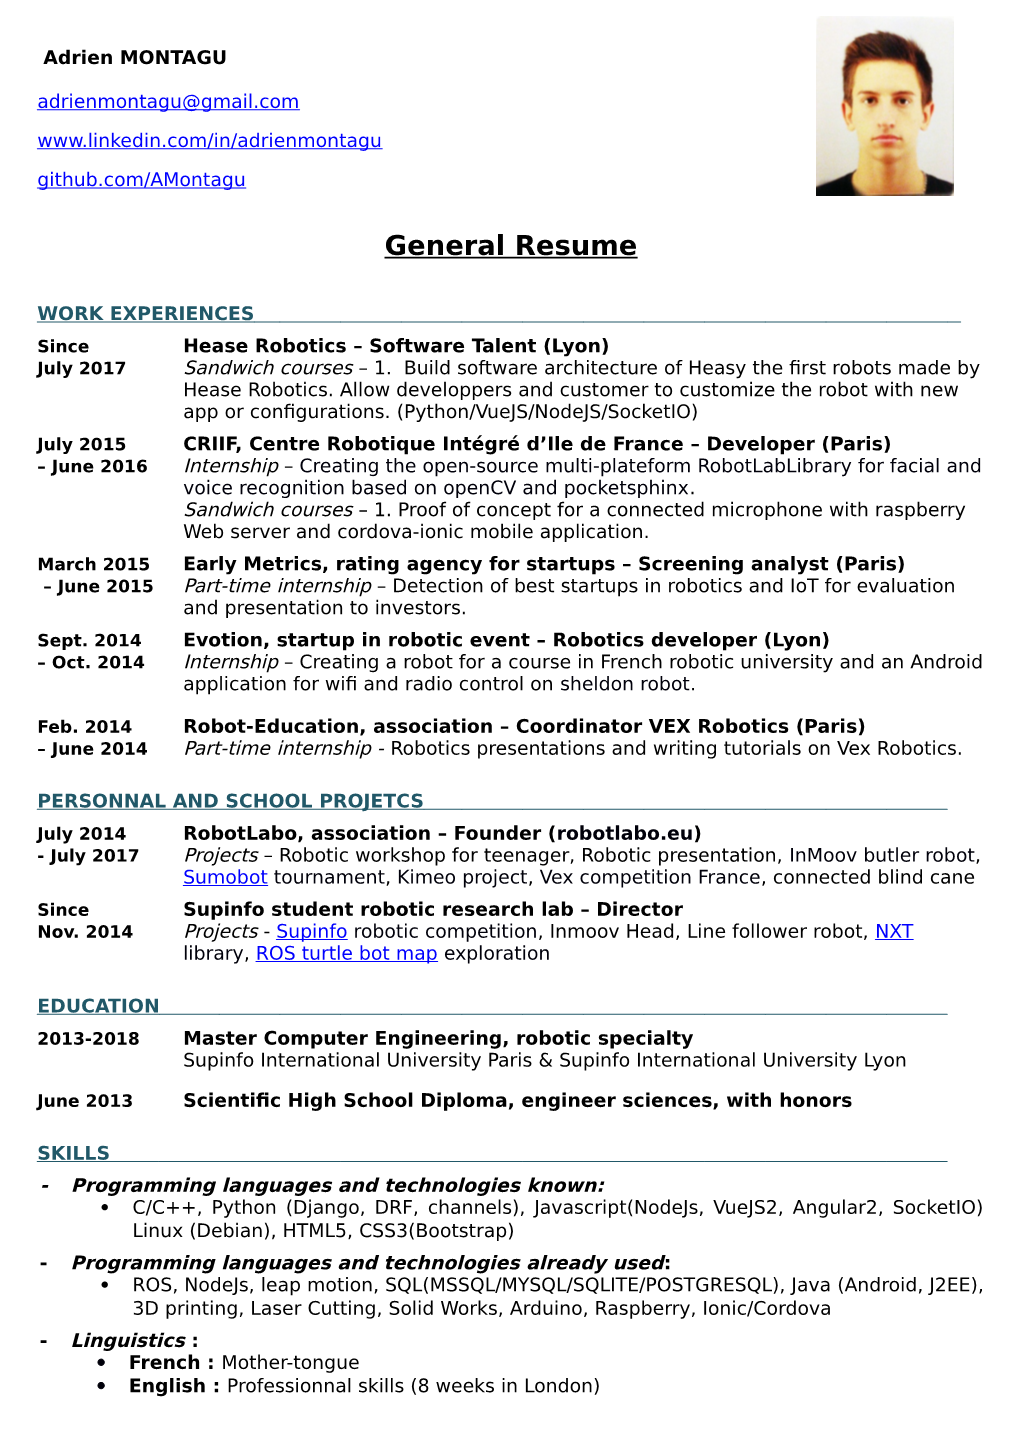 General Resume